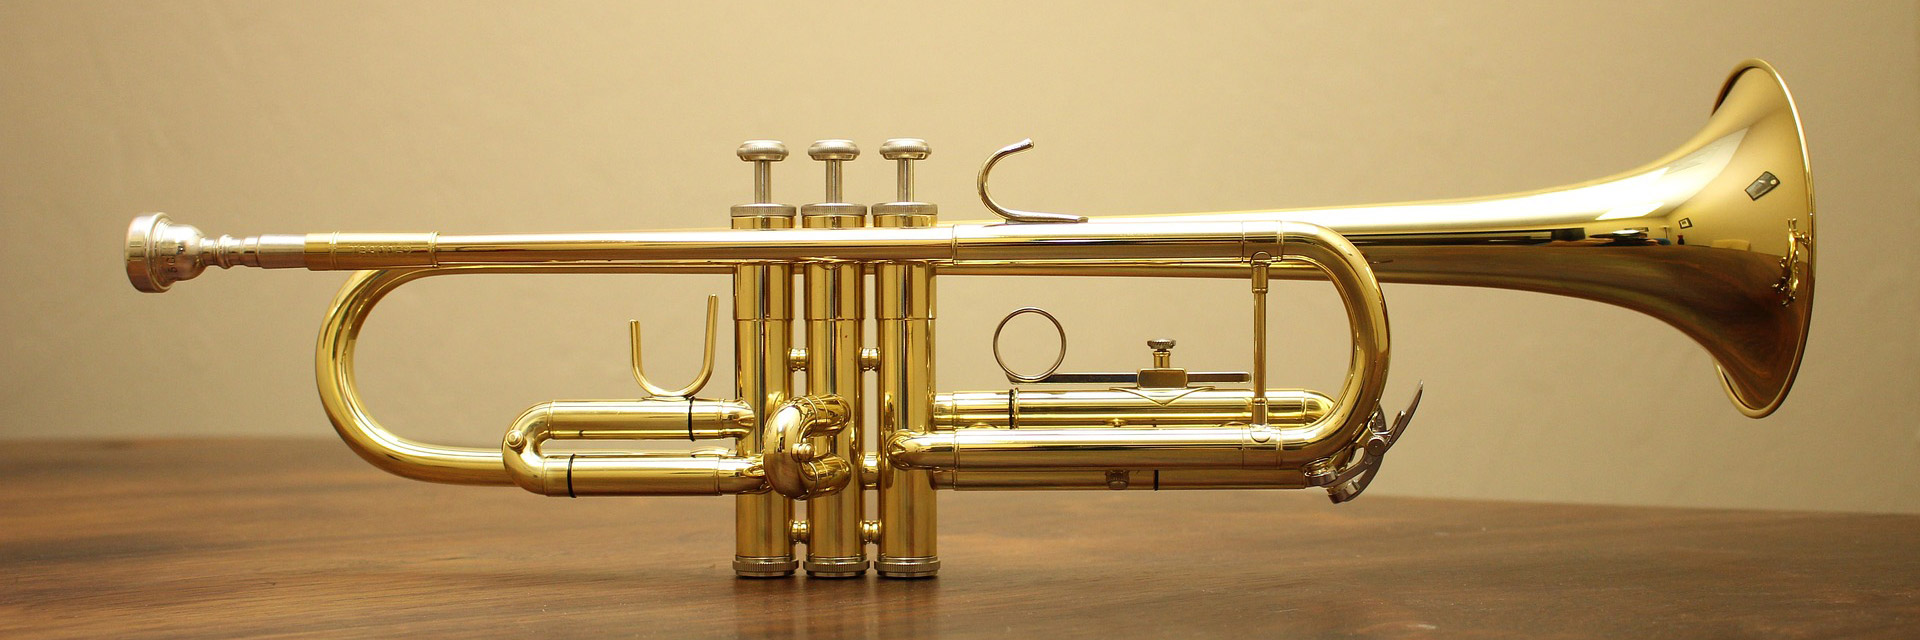 trumpet-5201175_1920.jpg